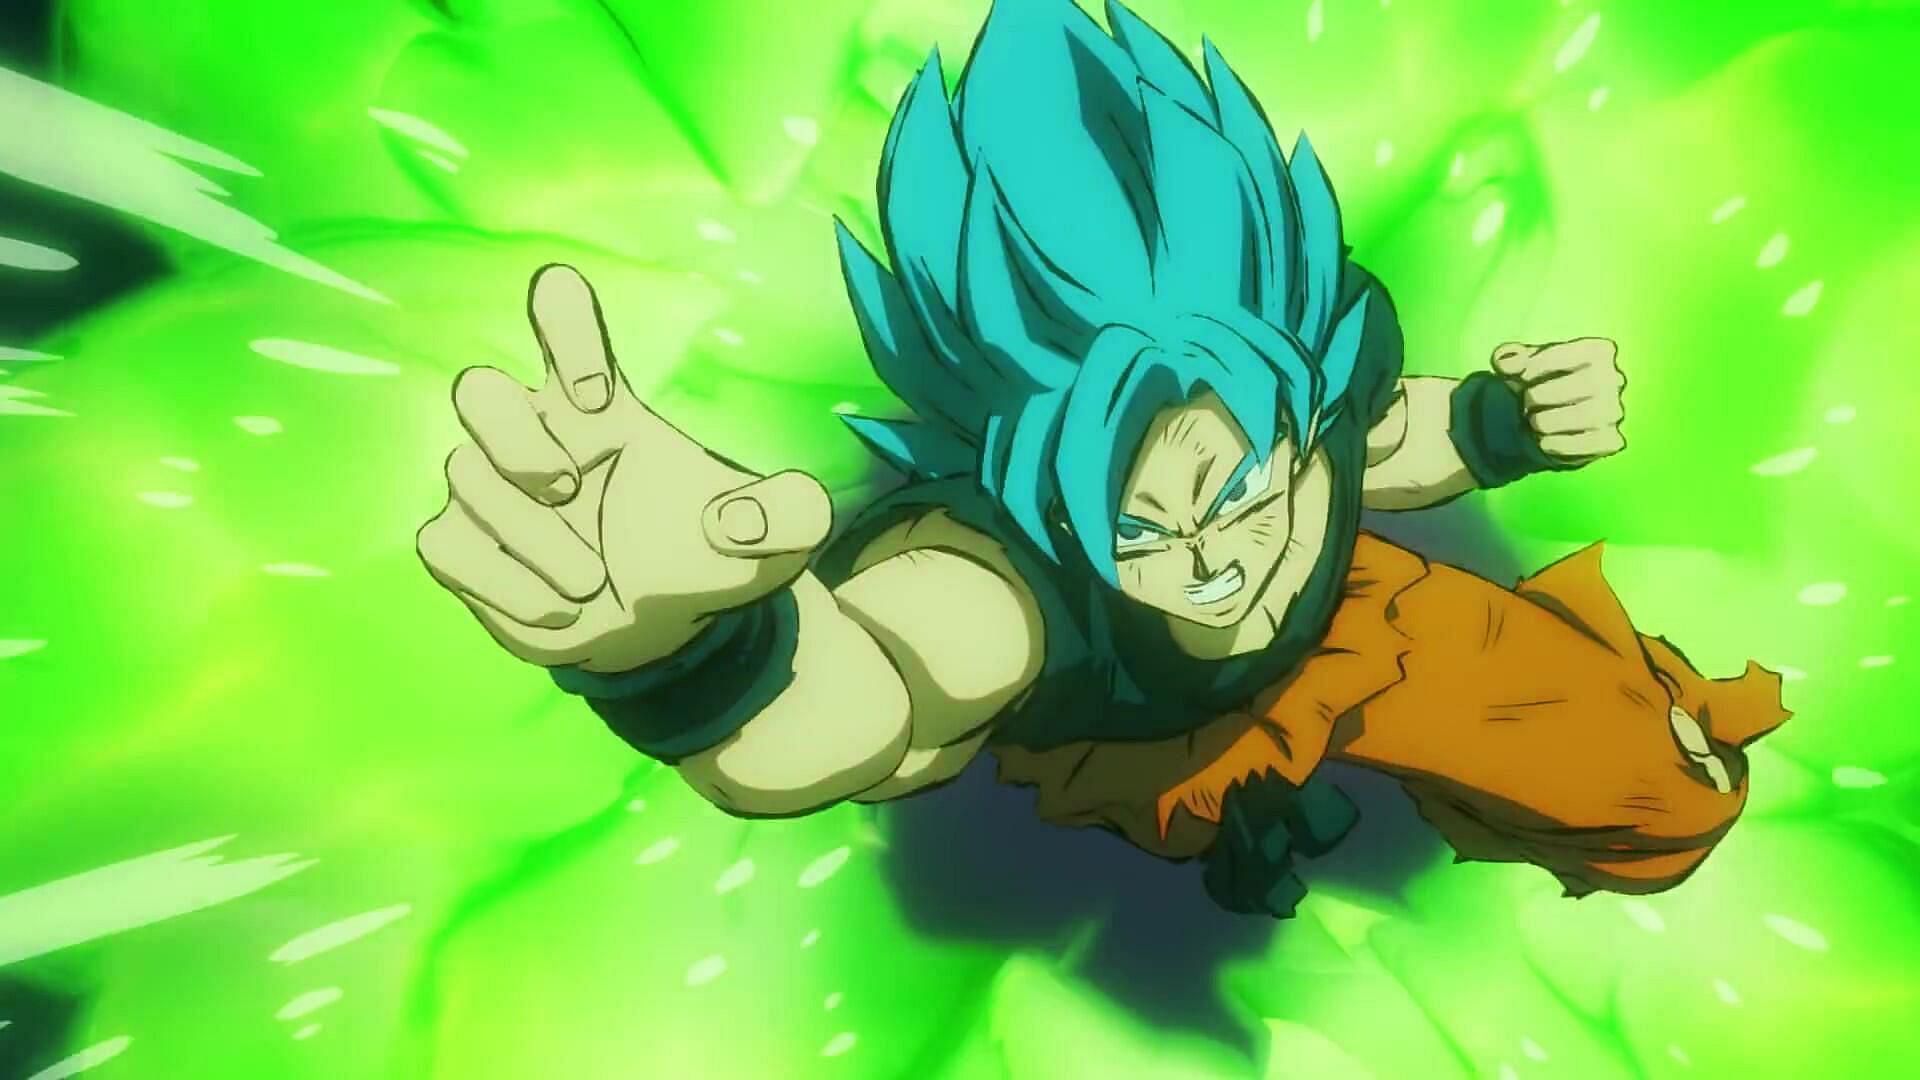 Super Saiyan Blue Goku from Dragon Ball Super (Image by Toei Animation)